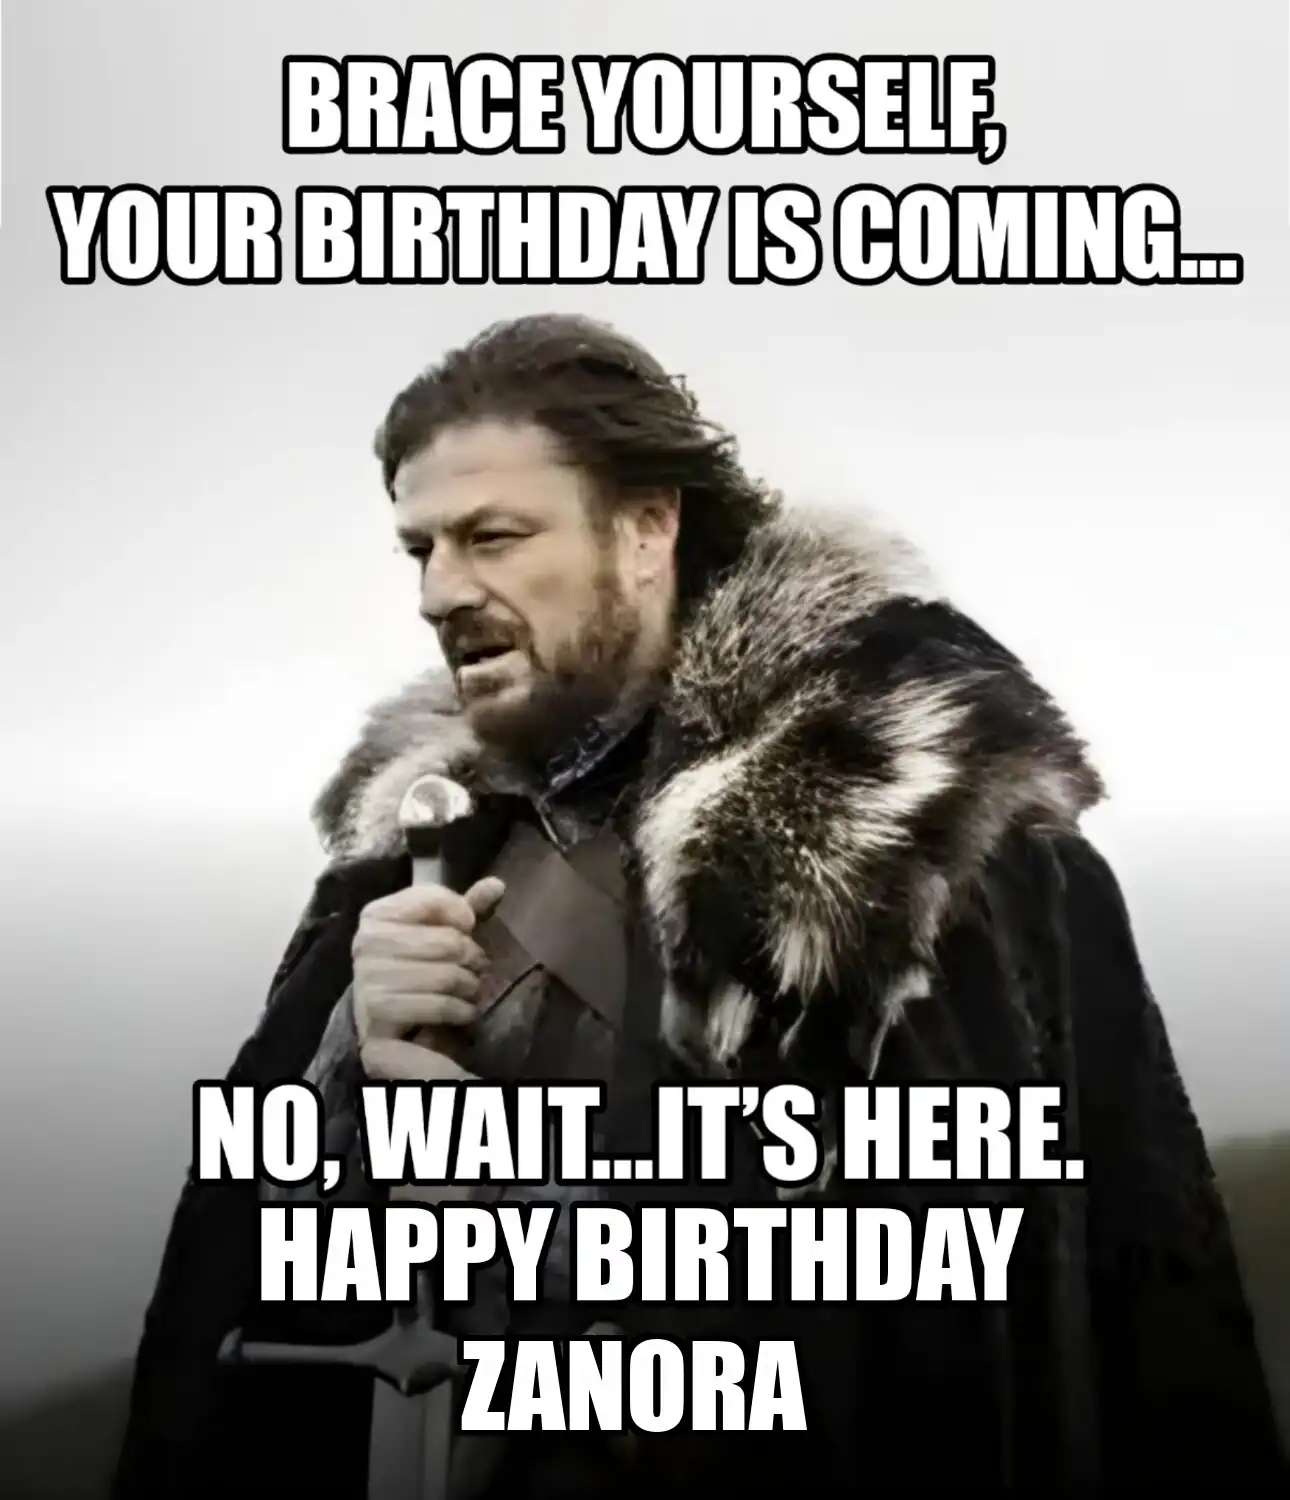 Happy Birthday Zanora Brace Yourself Your Birthday Is Coming Meme